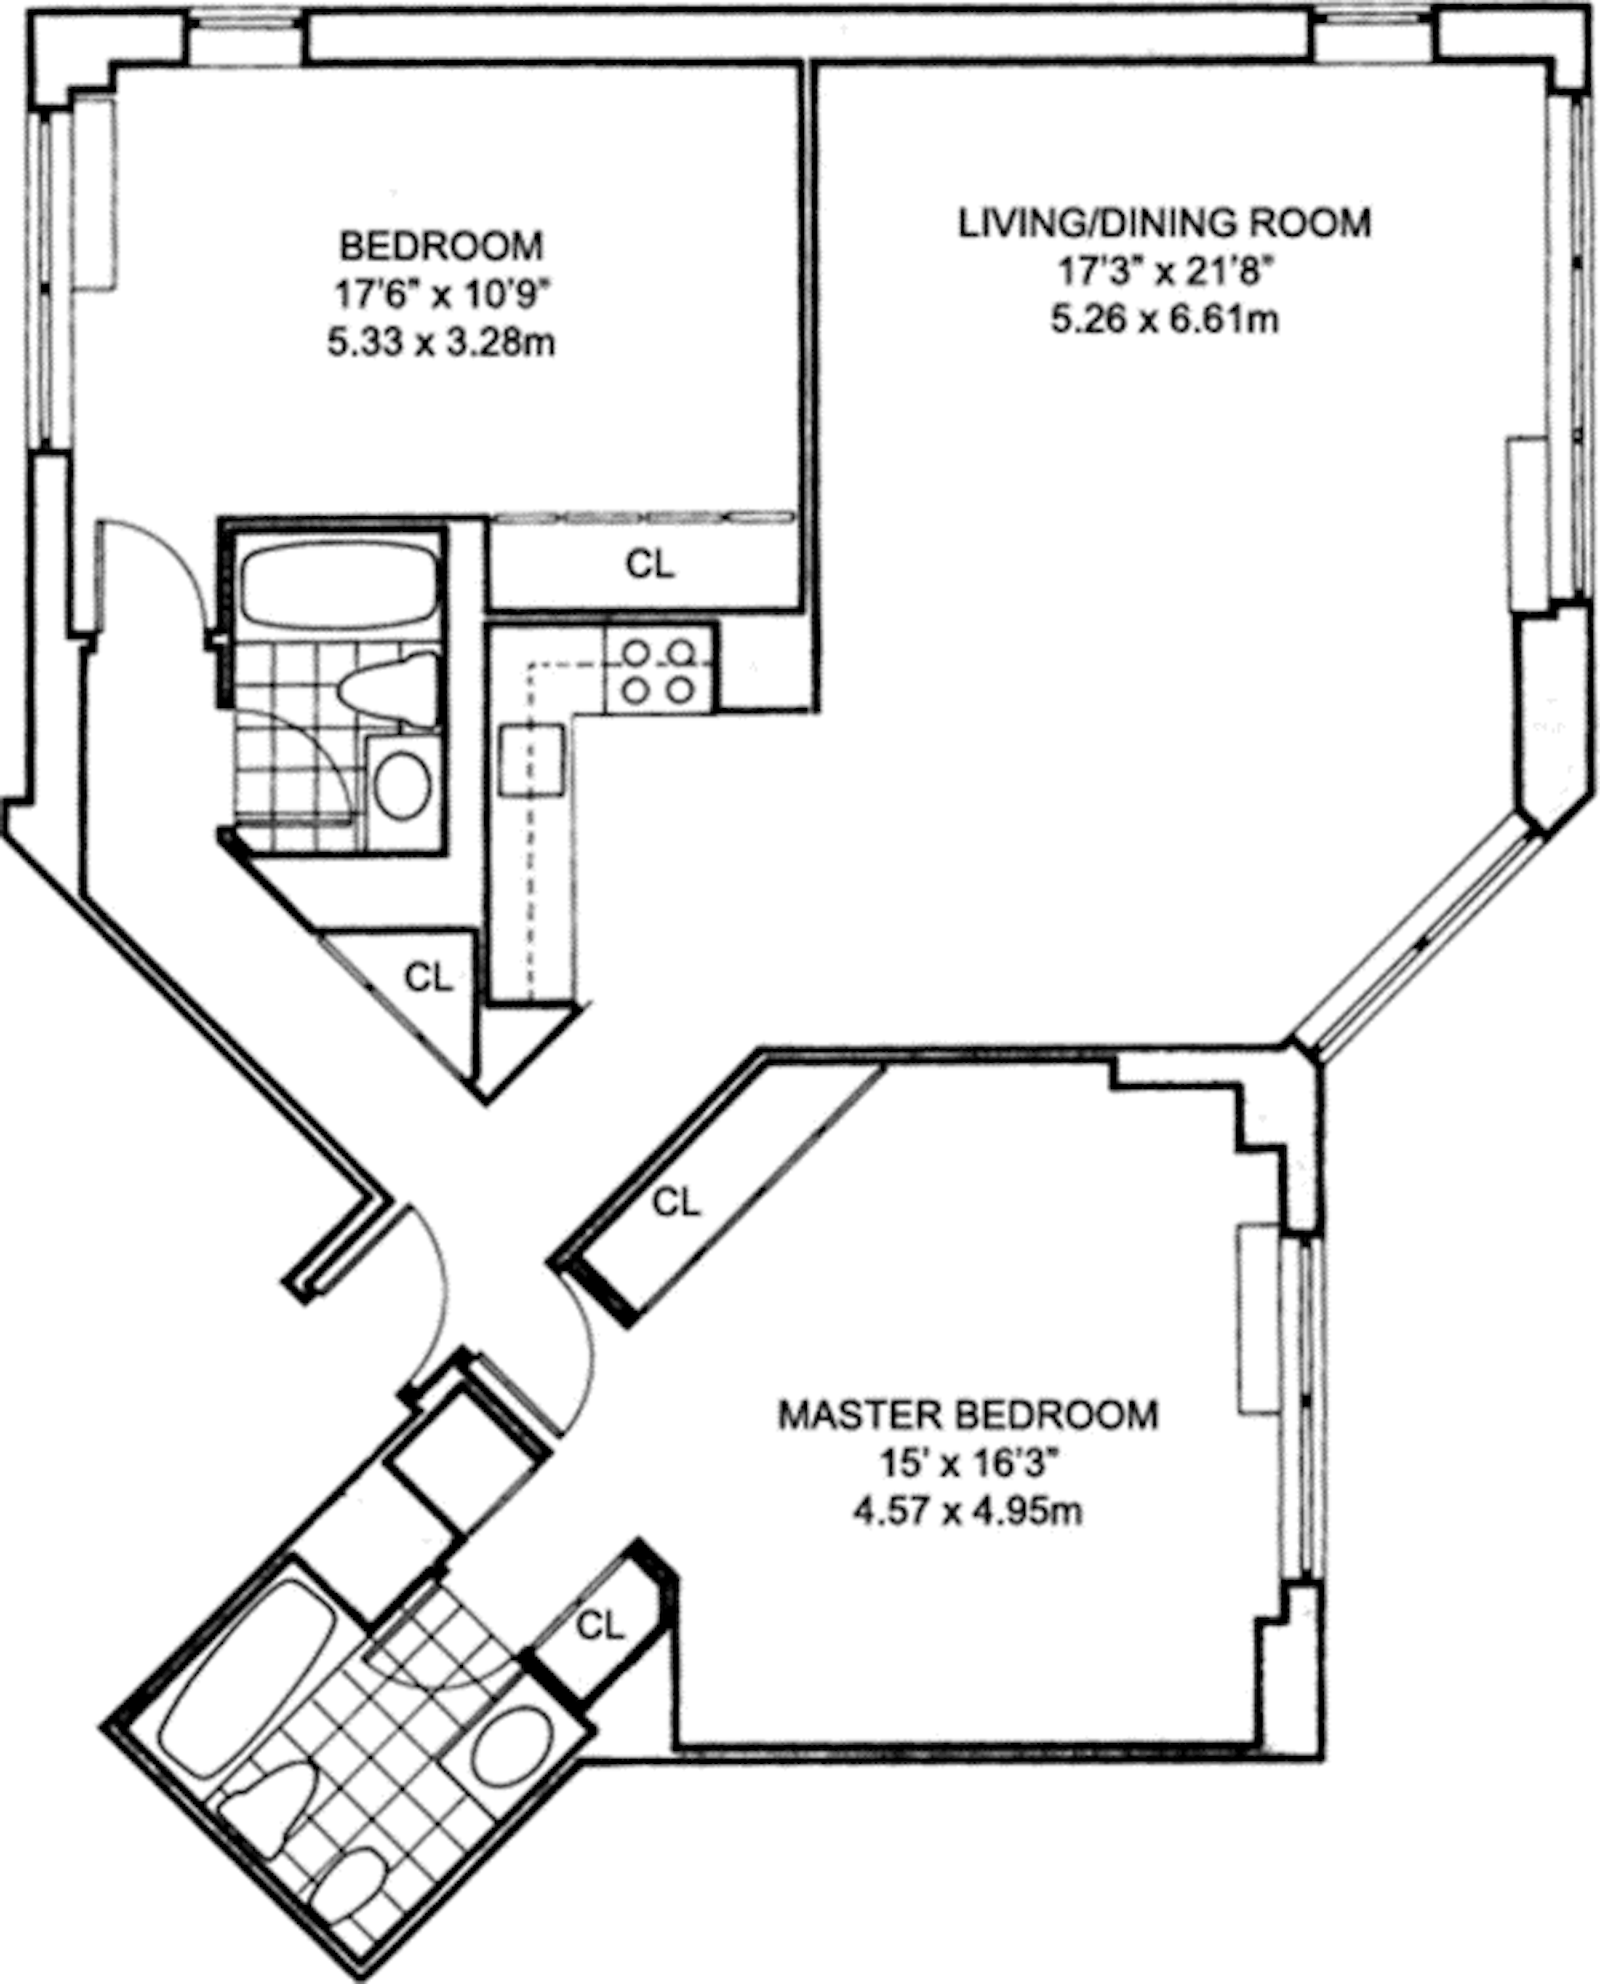 Floorplan for 303 East 43rd Street, 10A